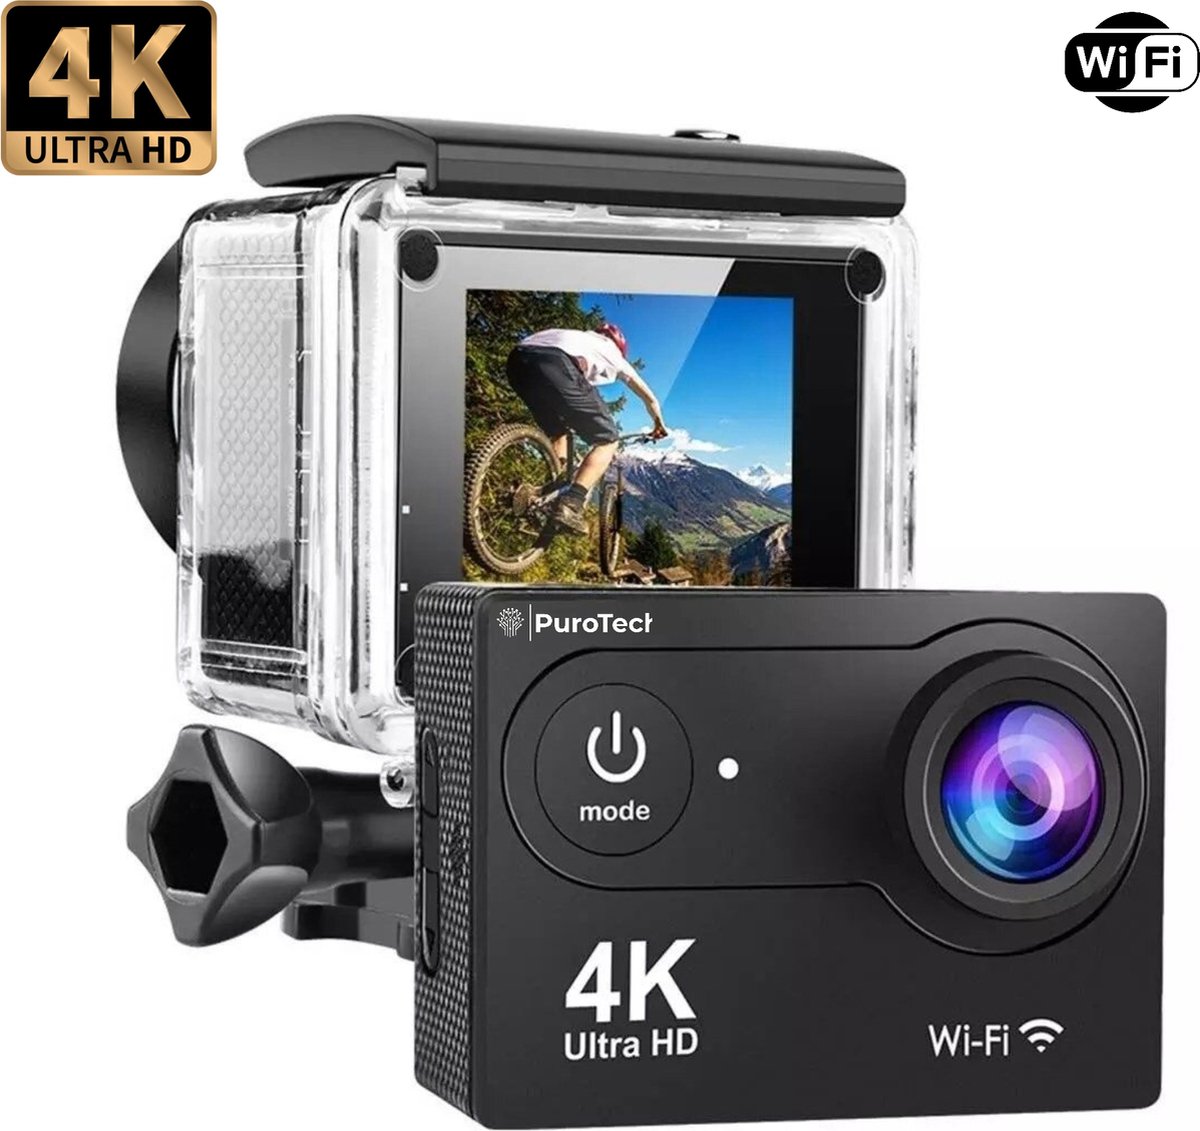 Akamduman® - Action Camera - Gopro - Caméra Vlog - Dashcam - Stabilisation  d'image 